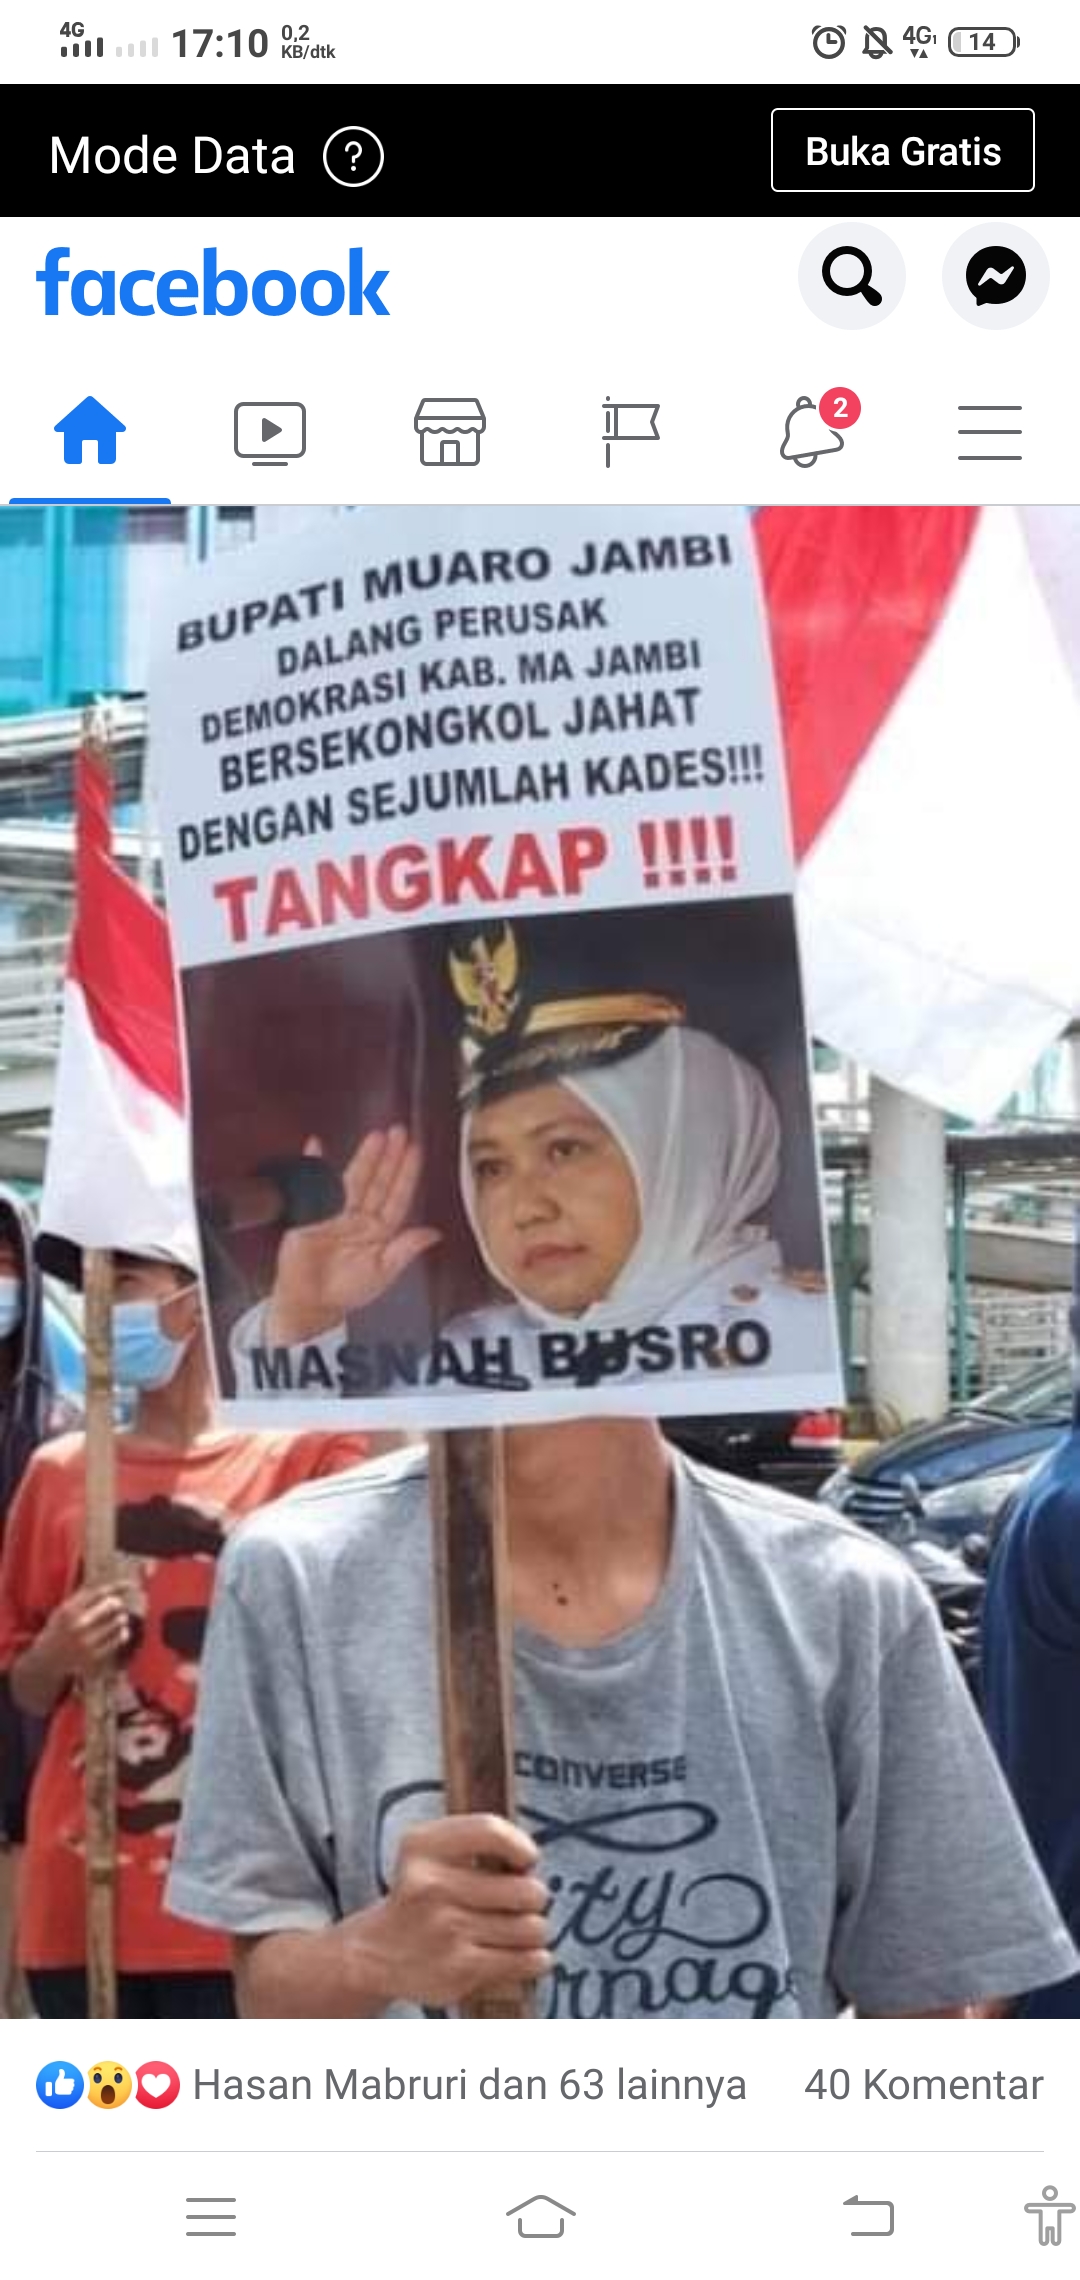 Heboh! Pro-Kontra Poster Tangkap Bupati Muaro Jambi 